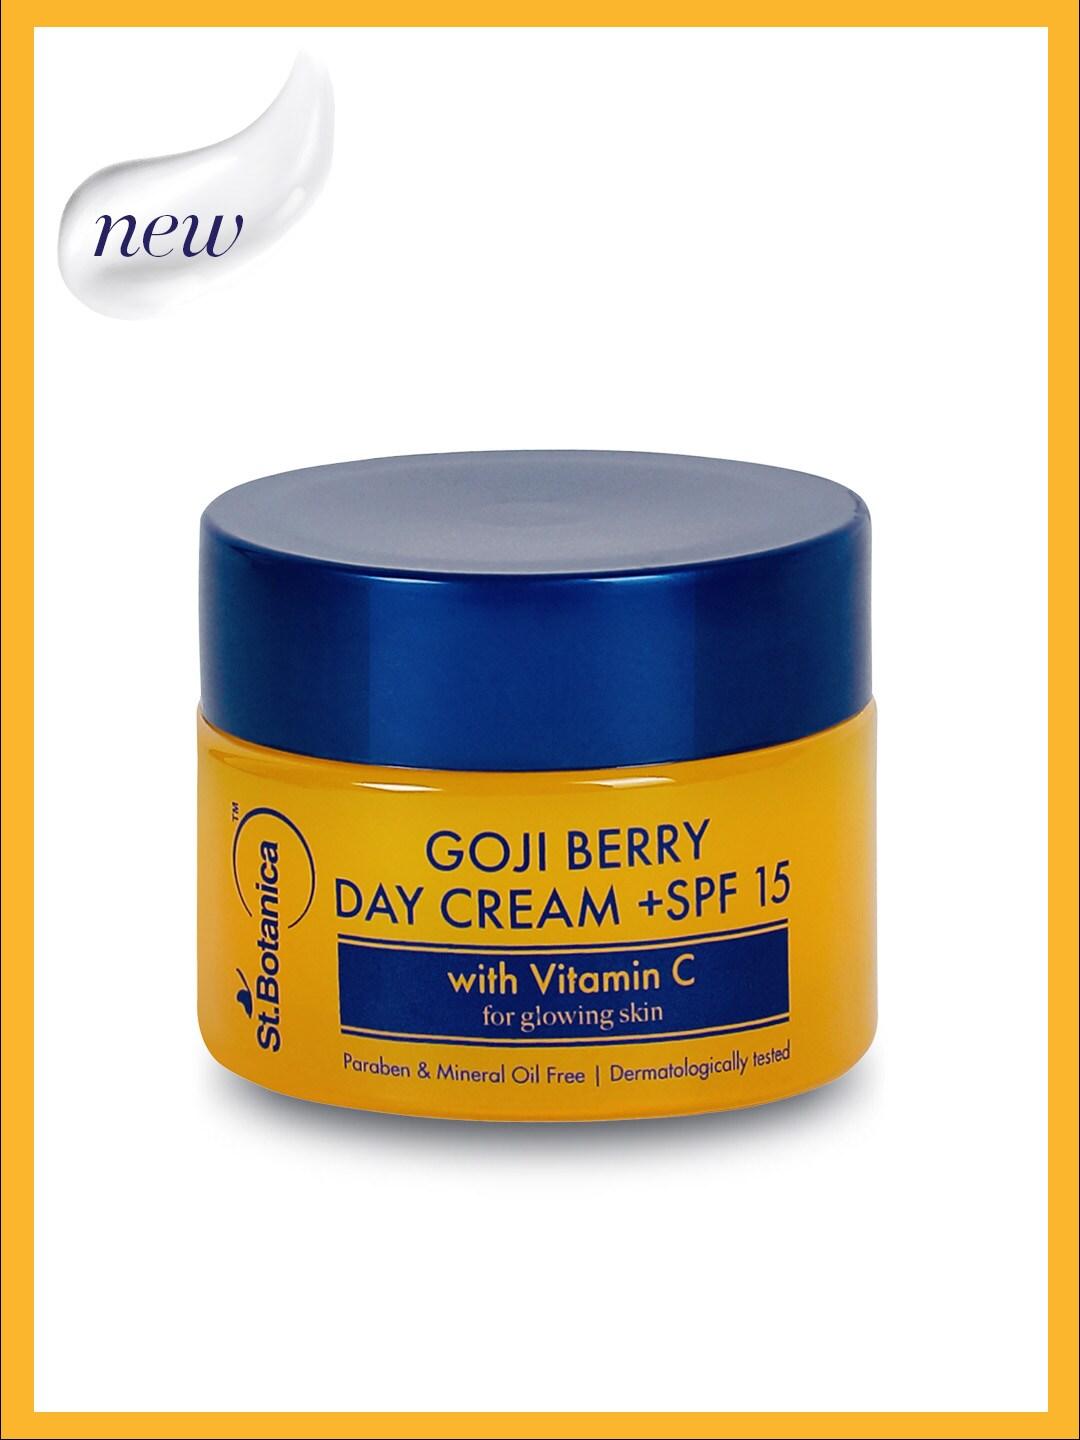 St.Botanica SPF15 Goji Berry & Vitamin C Day Cream for Sun Protection - 50 g